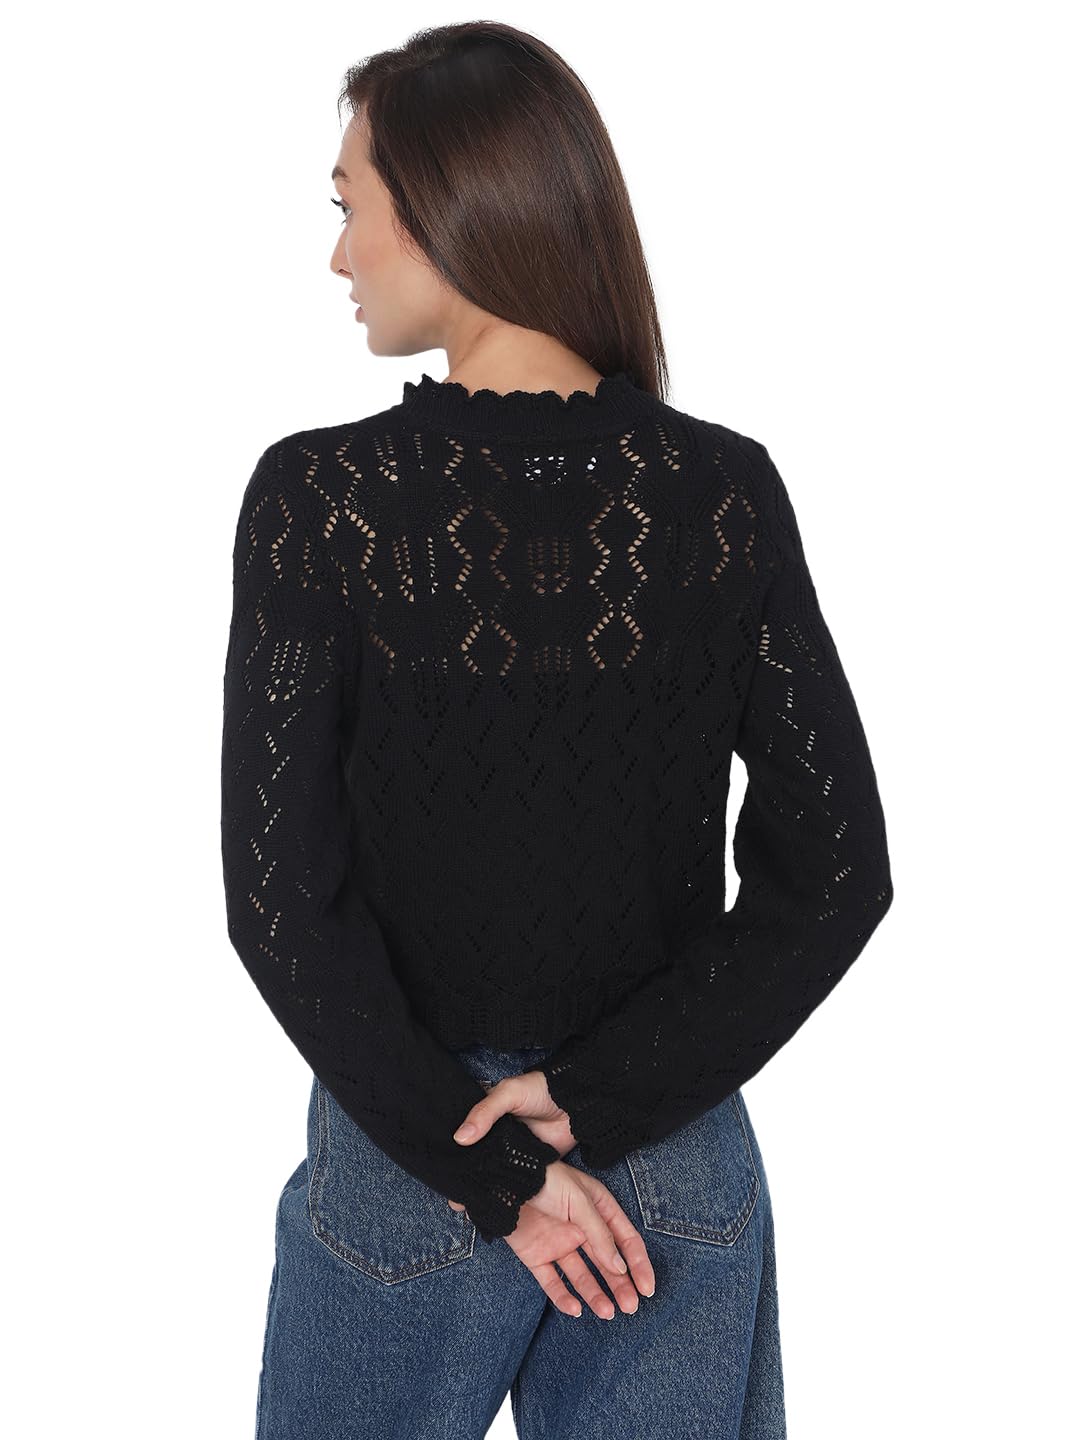 VERO MODA Women's Cotton Round Neck Sweater (10293696- Black